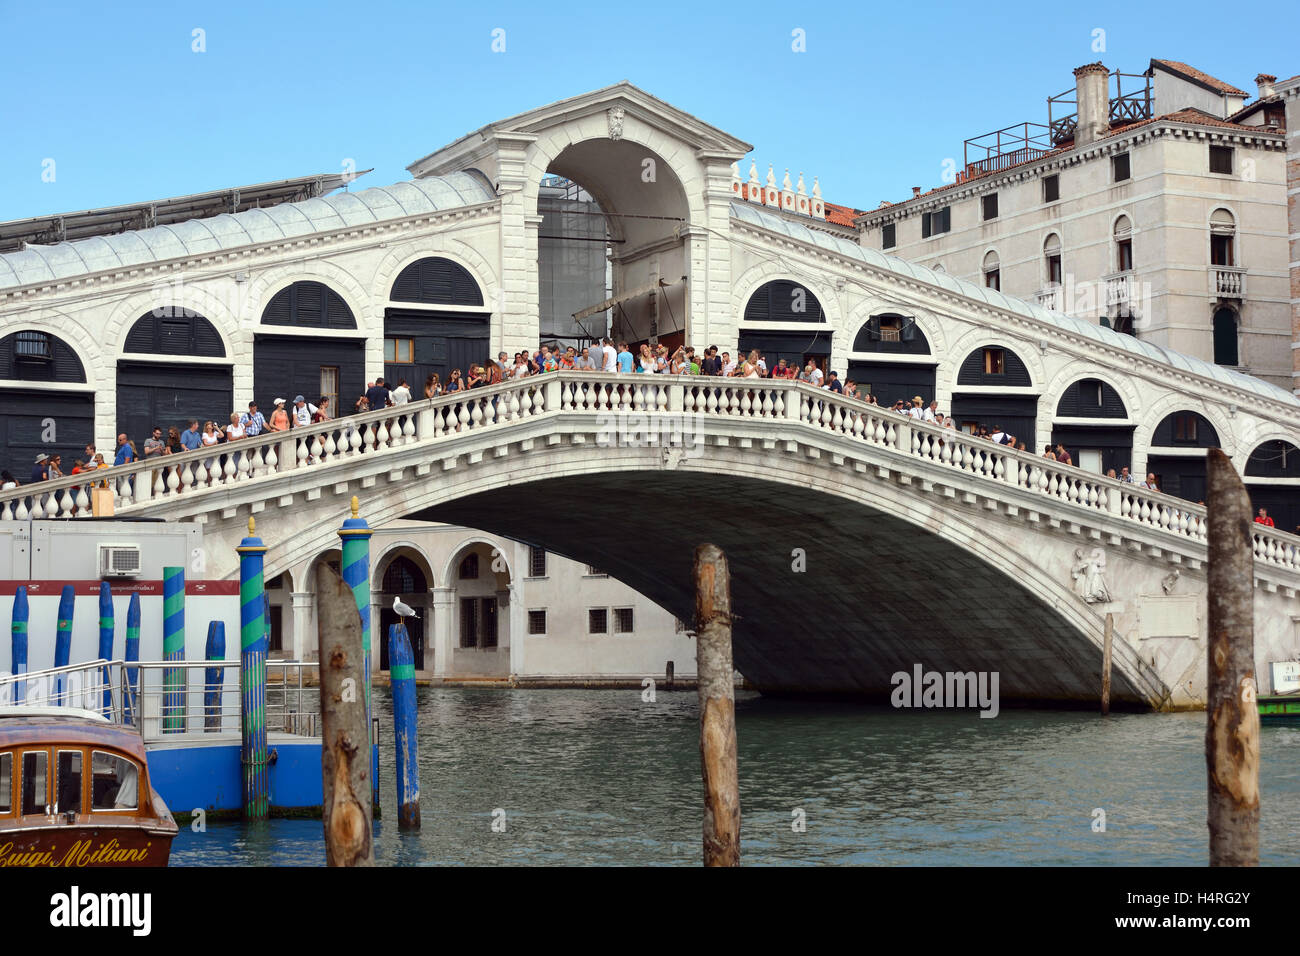 Rialto Bridge at the Grand Canal of Venice in Italy. Stock Photo